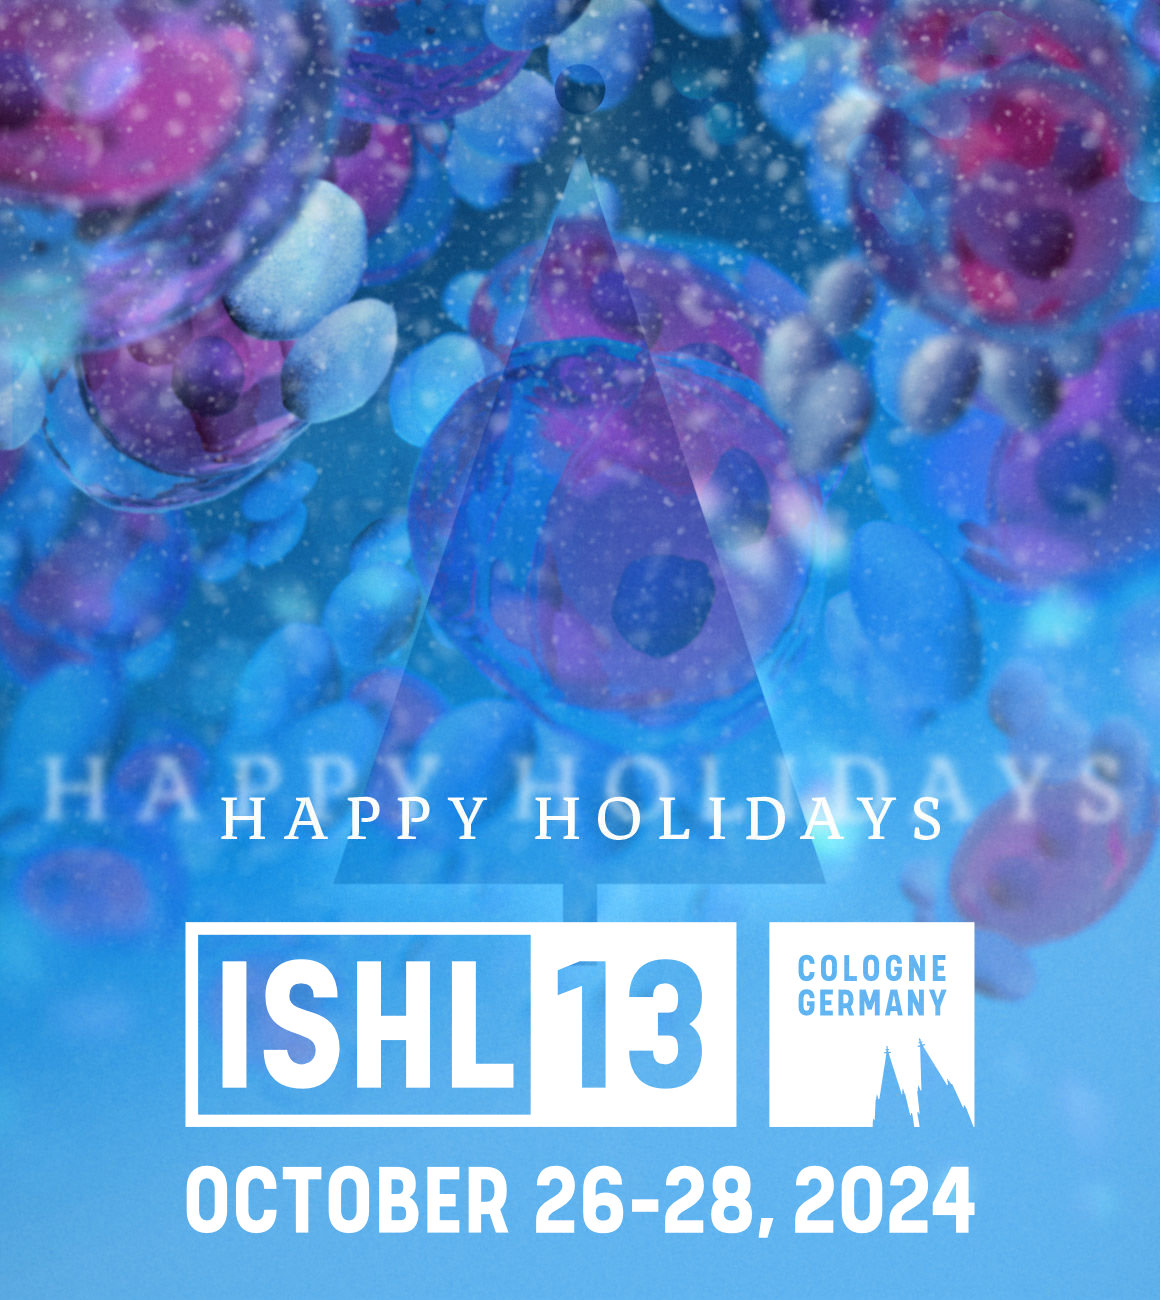 ISHL13 – Happy Holidays